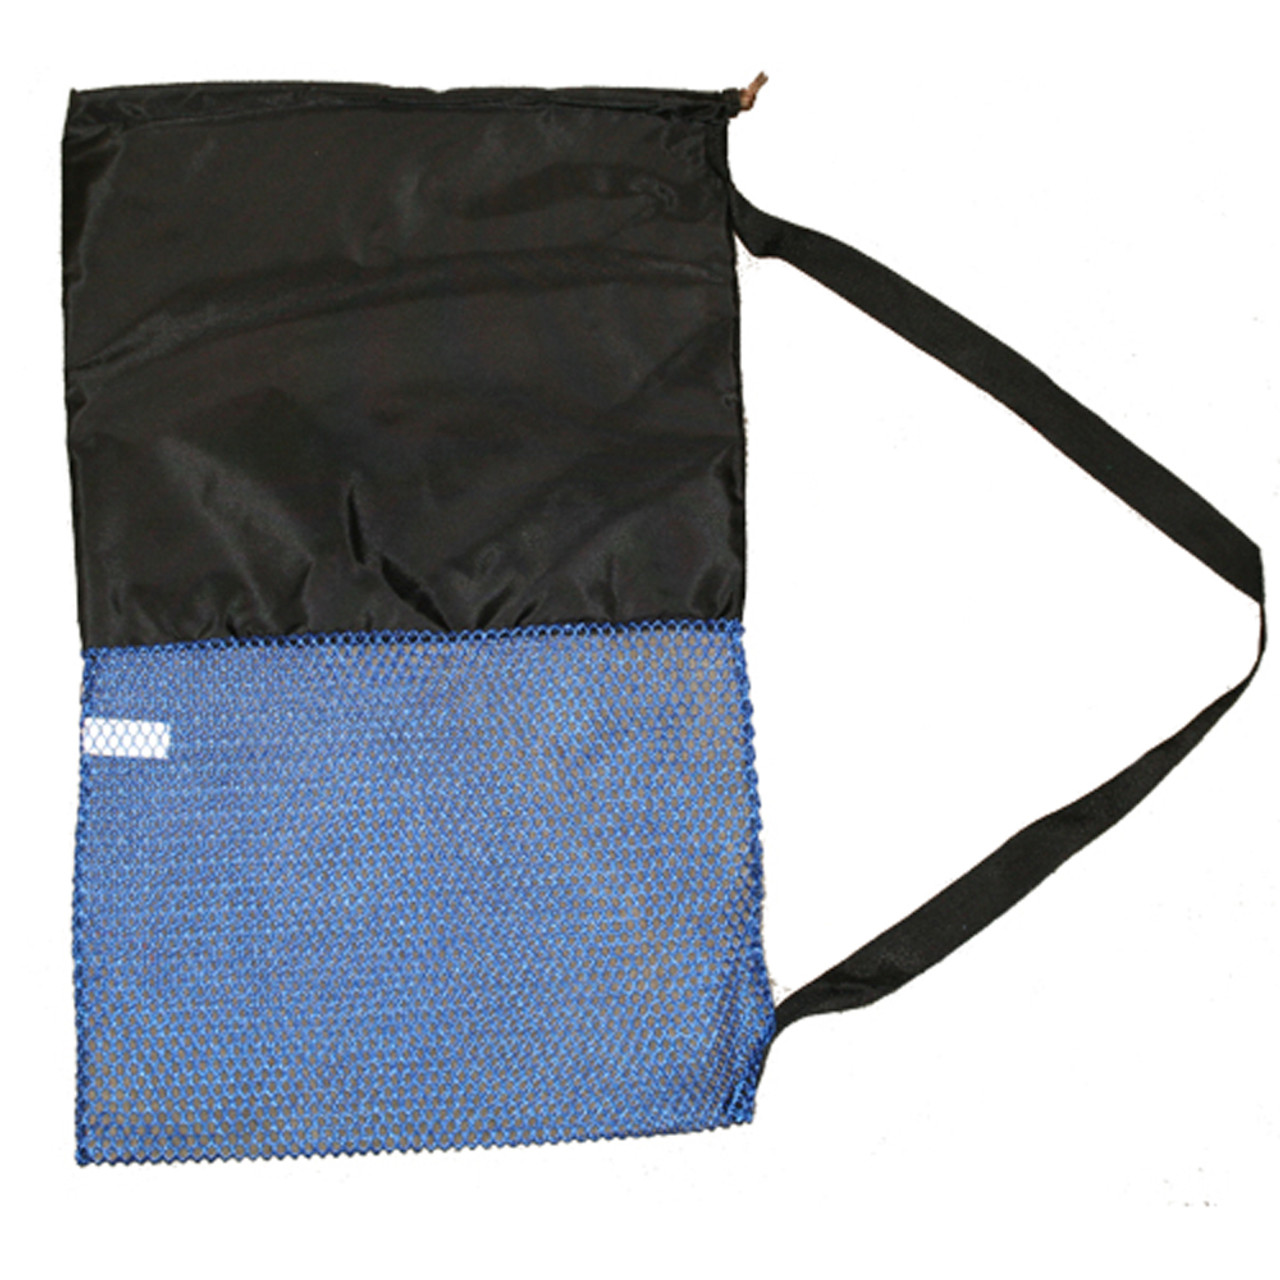 Stuff Sack with Shoulder Strap, Blue/Black, 24inch x 36inch